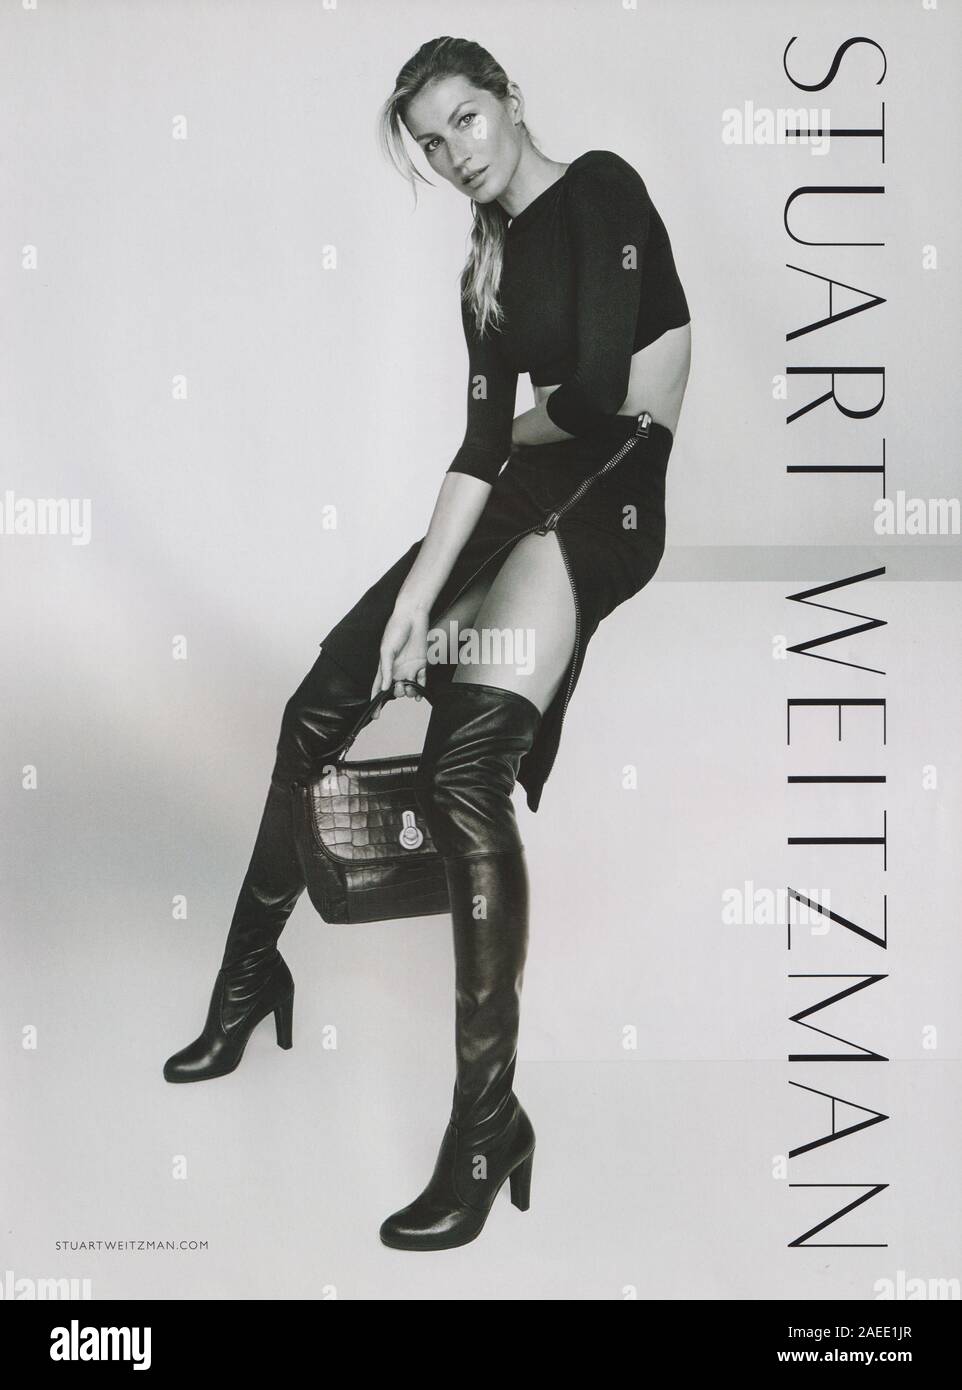 Plakat werbung Stuart Weitzman schuhe Mode mit Gisele Bundchen im Magazin  von 2015, Werbung, kreative Stuart Weitzman 2010 s Anzeige Stockfotografie  - Alamy